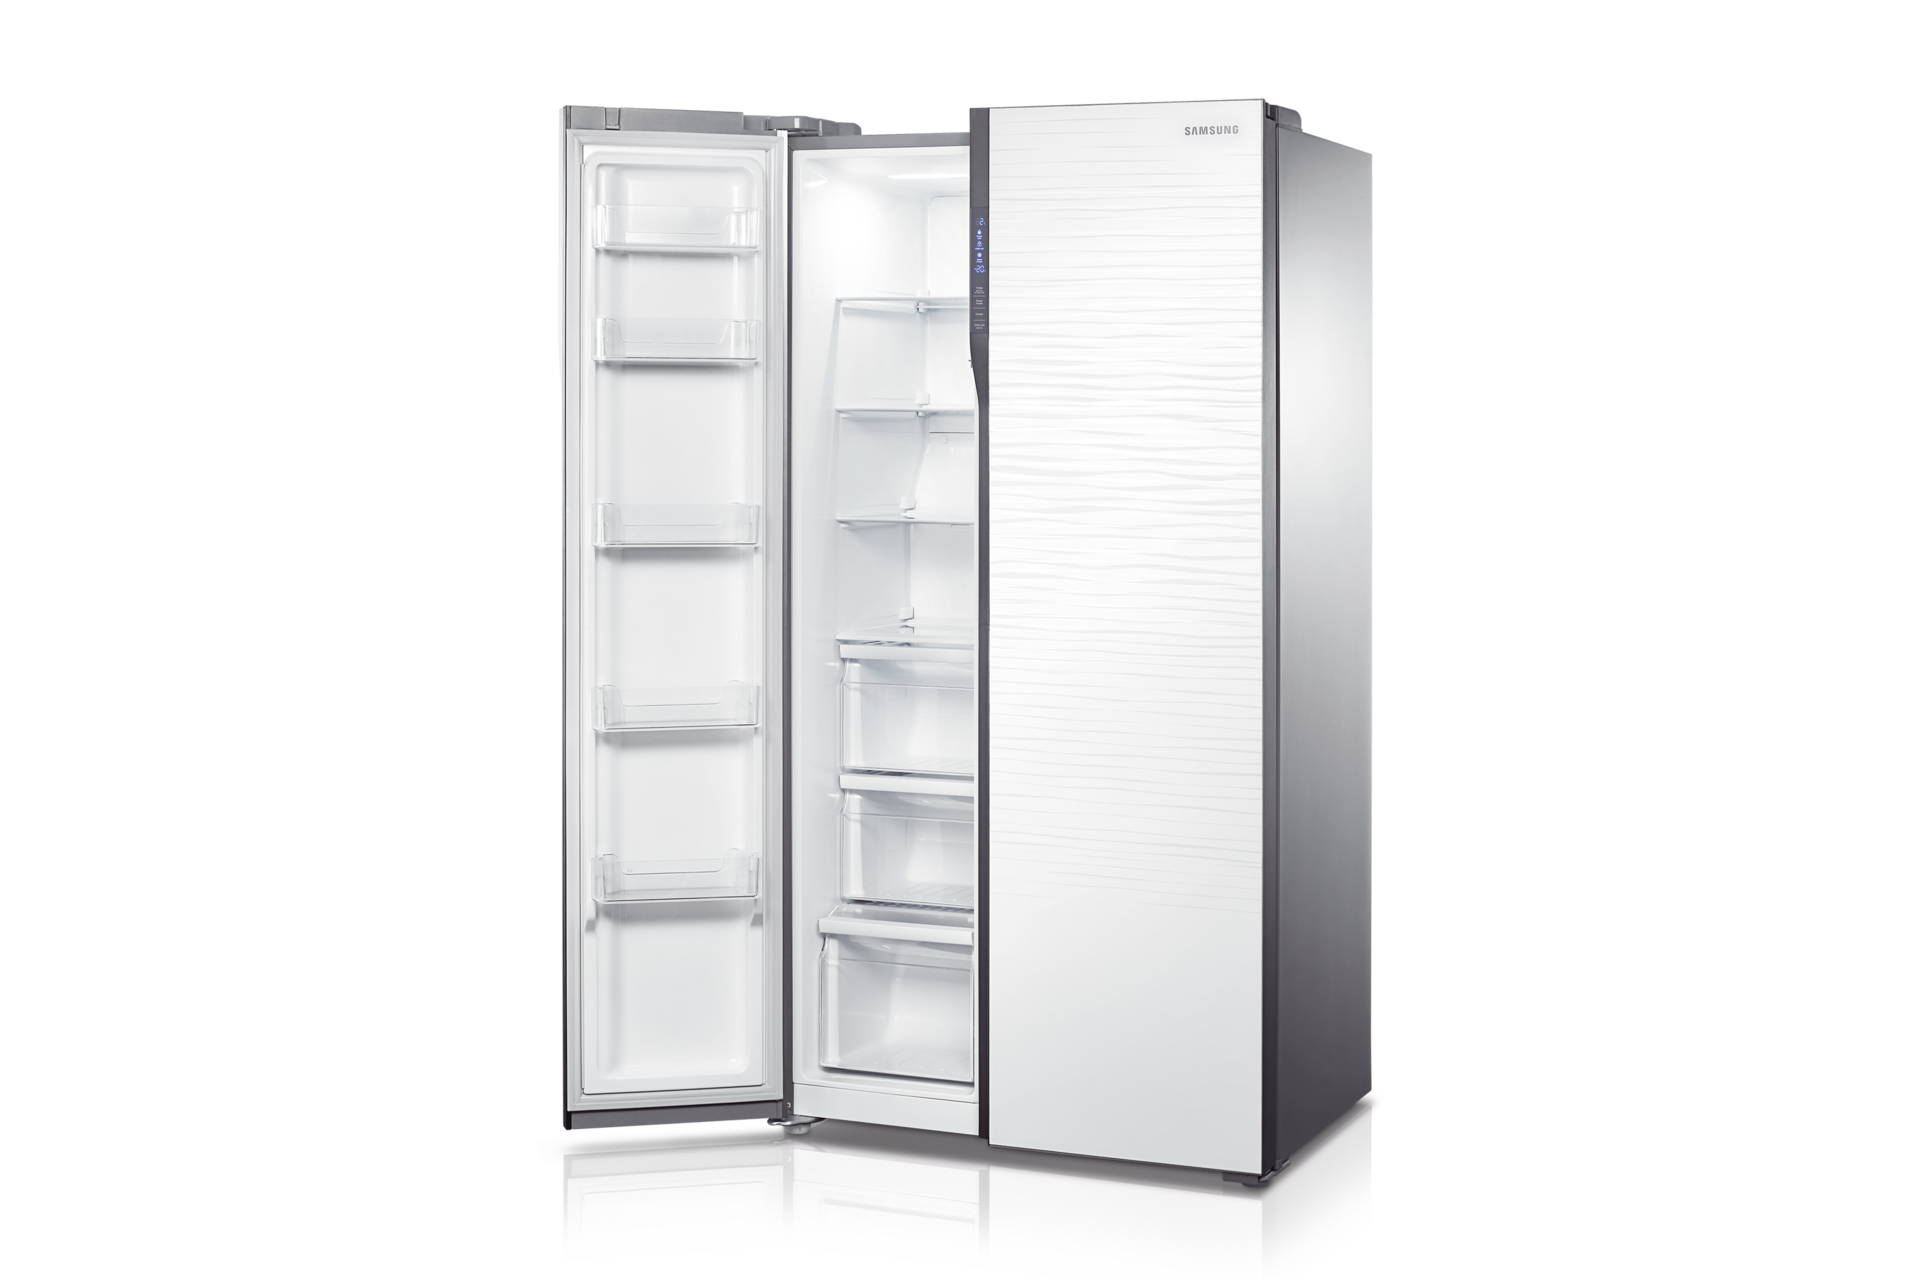 Холодильник 3 дюйма. Двустворчатый холодильник самсунг. Samsung Side by Side холодильник серебристый. Ширина двустворчатого холодильника. Высота двустворчатого холодильника.